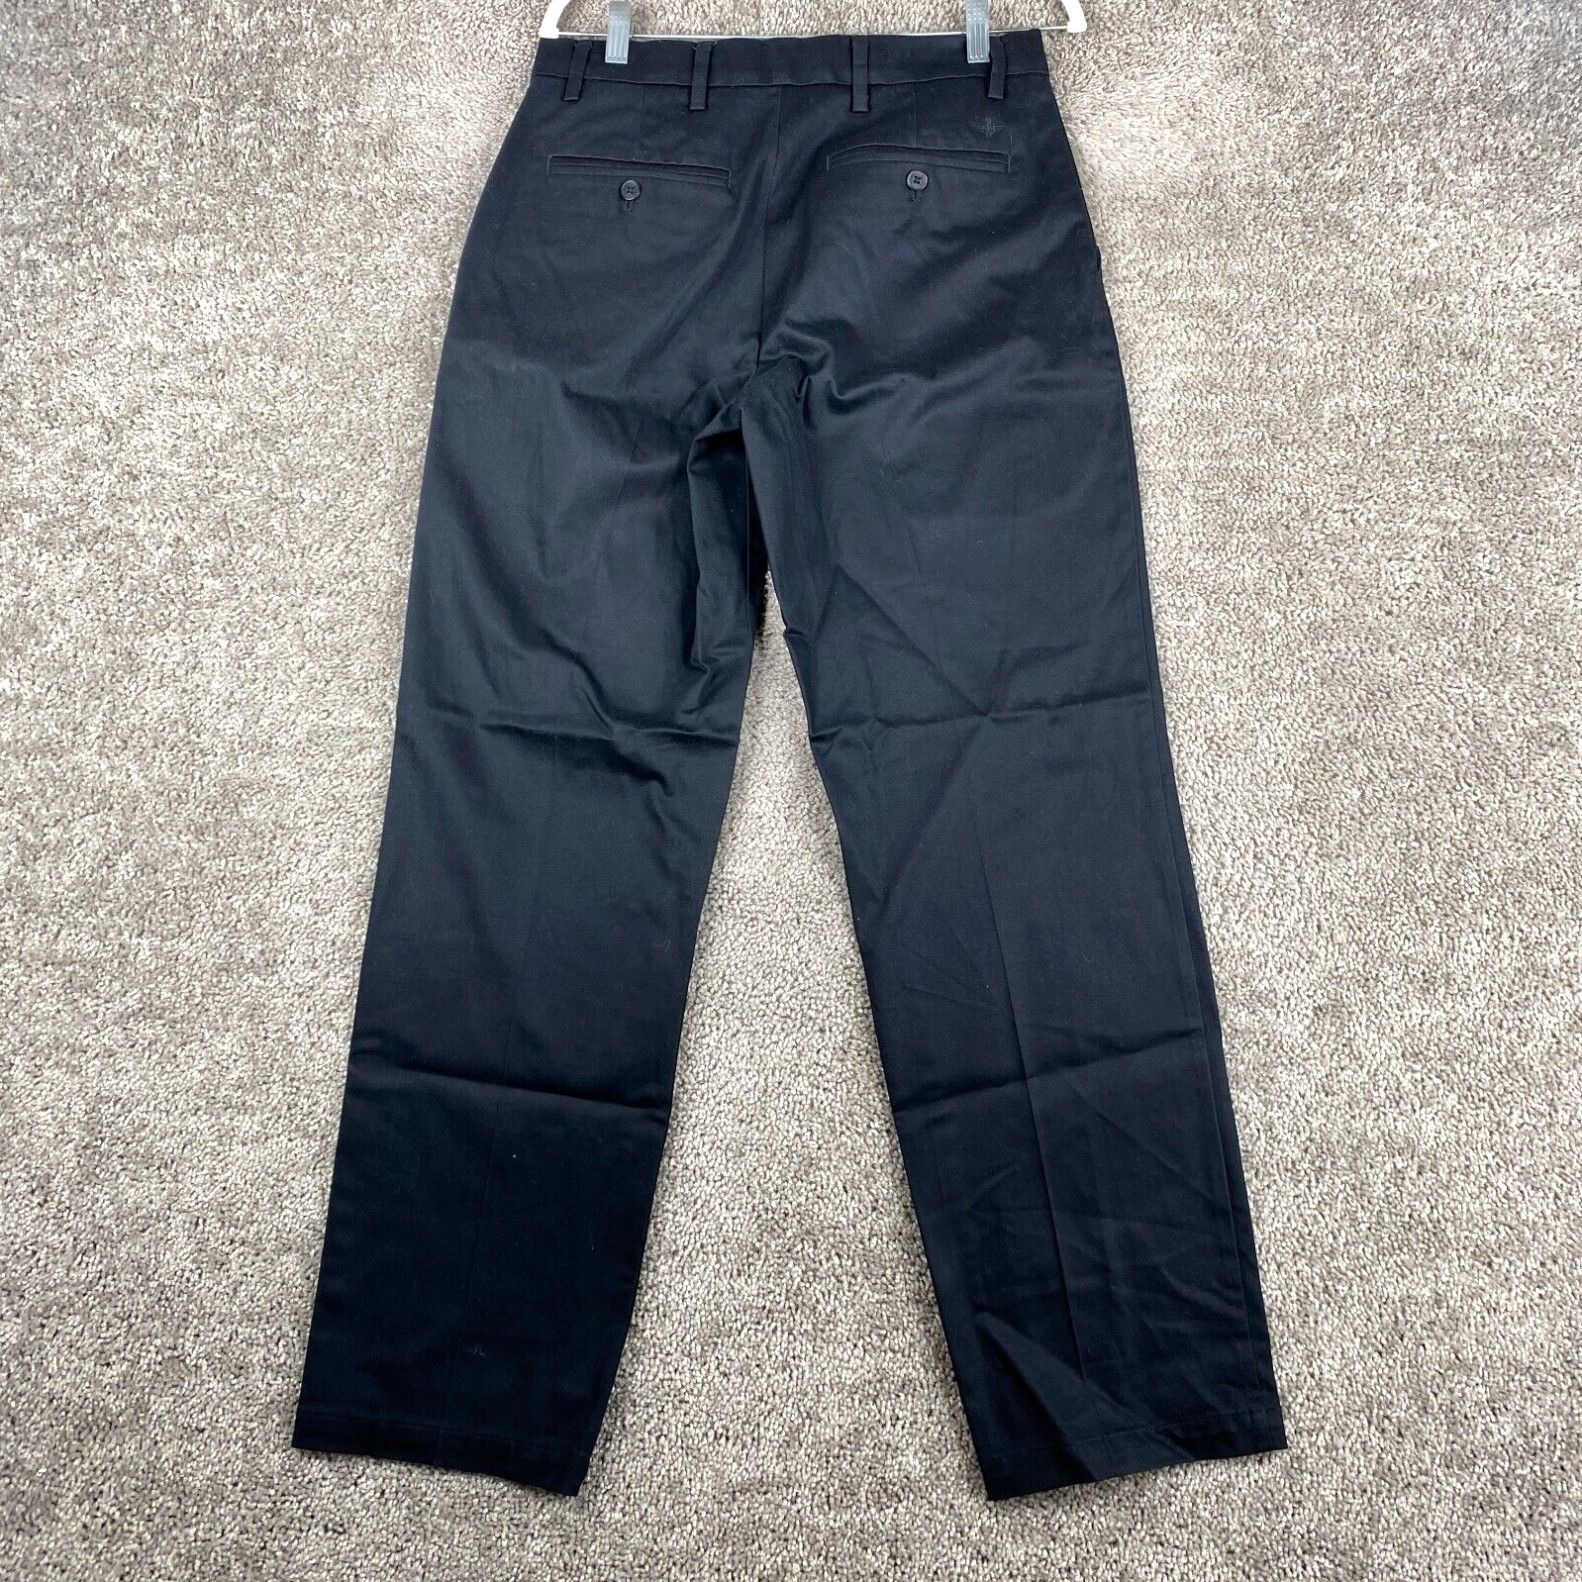 Dockers Dockers Classic Signature Khaki Pants Men's Size W30xL32 Black ...